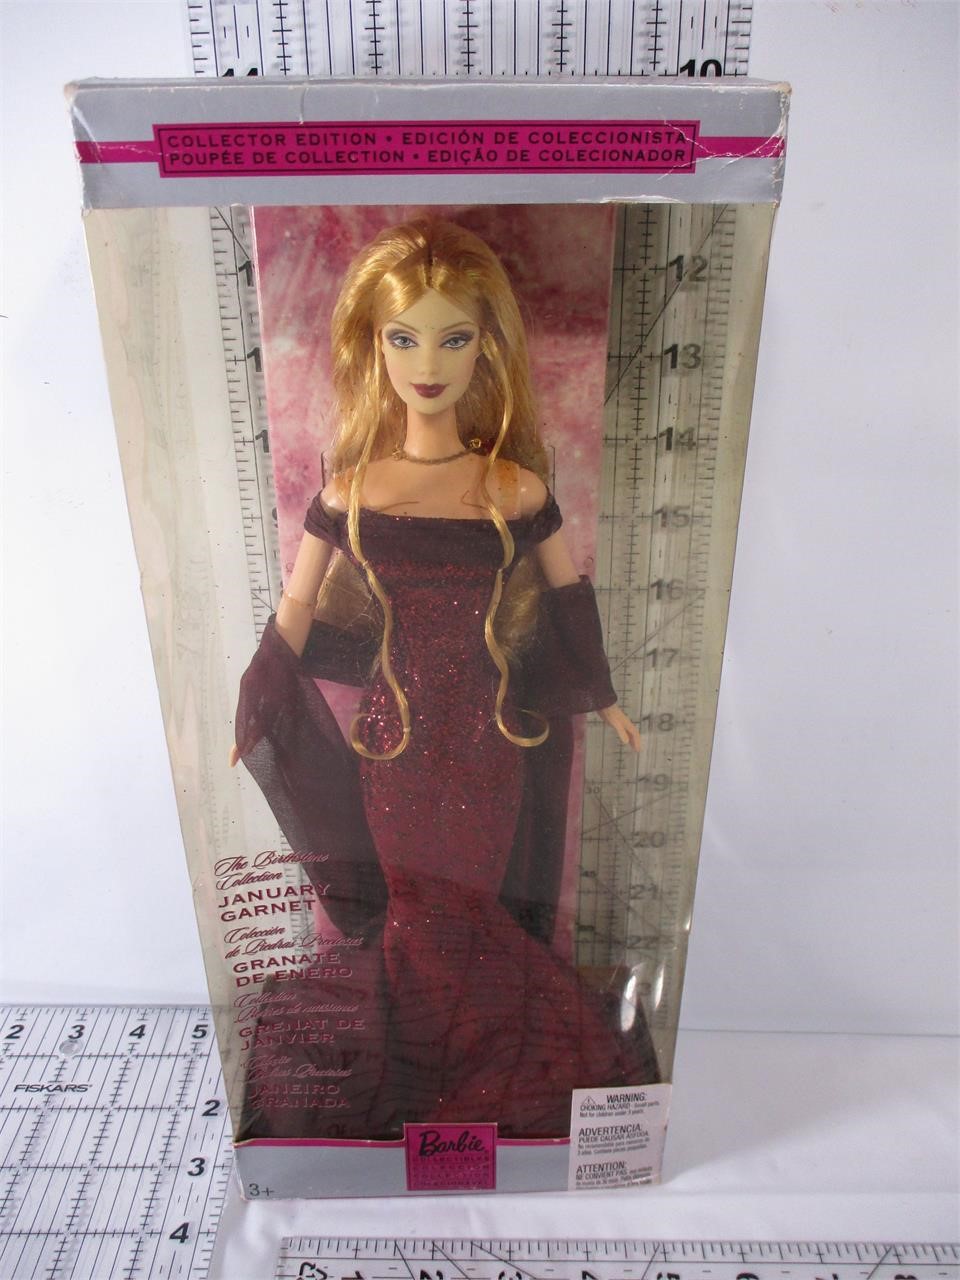 Collectors Edition January Garnet Barbie Doll 2002